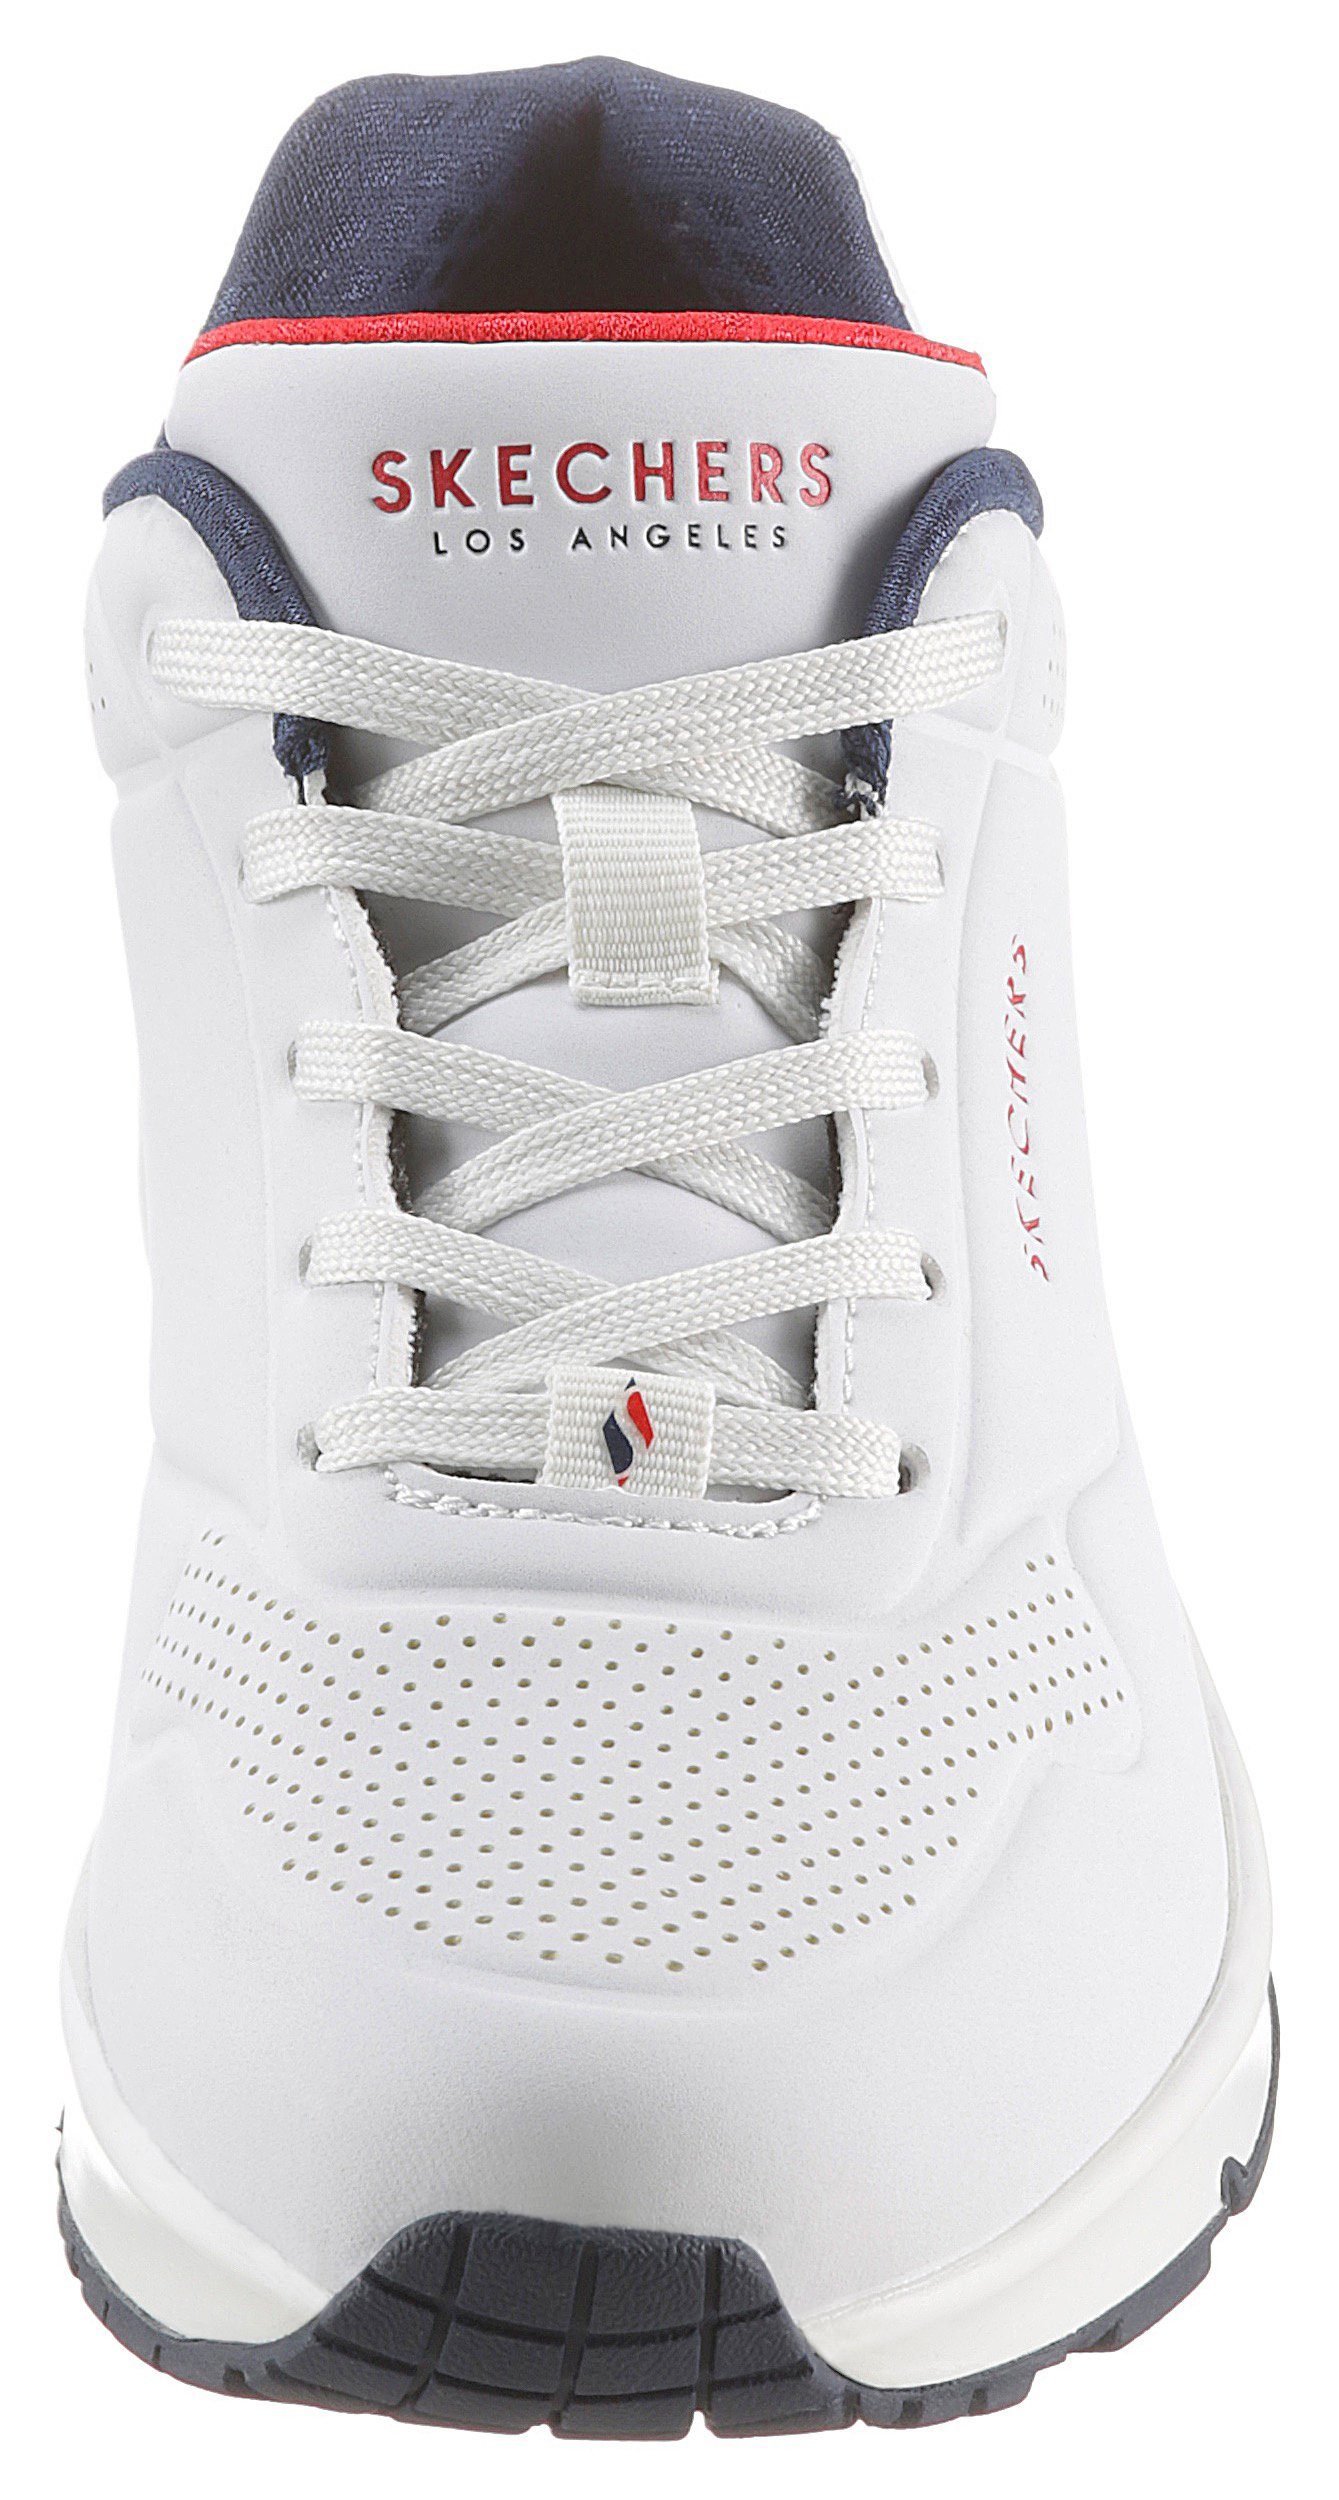 Uno Air - feiner white Perforation Skechers Wedgesneaker on mit Stand